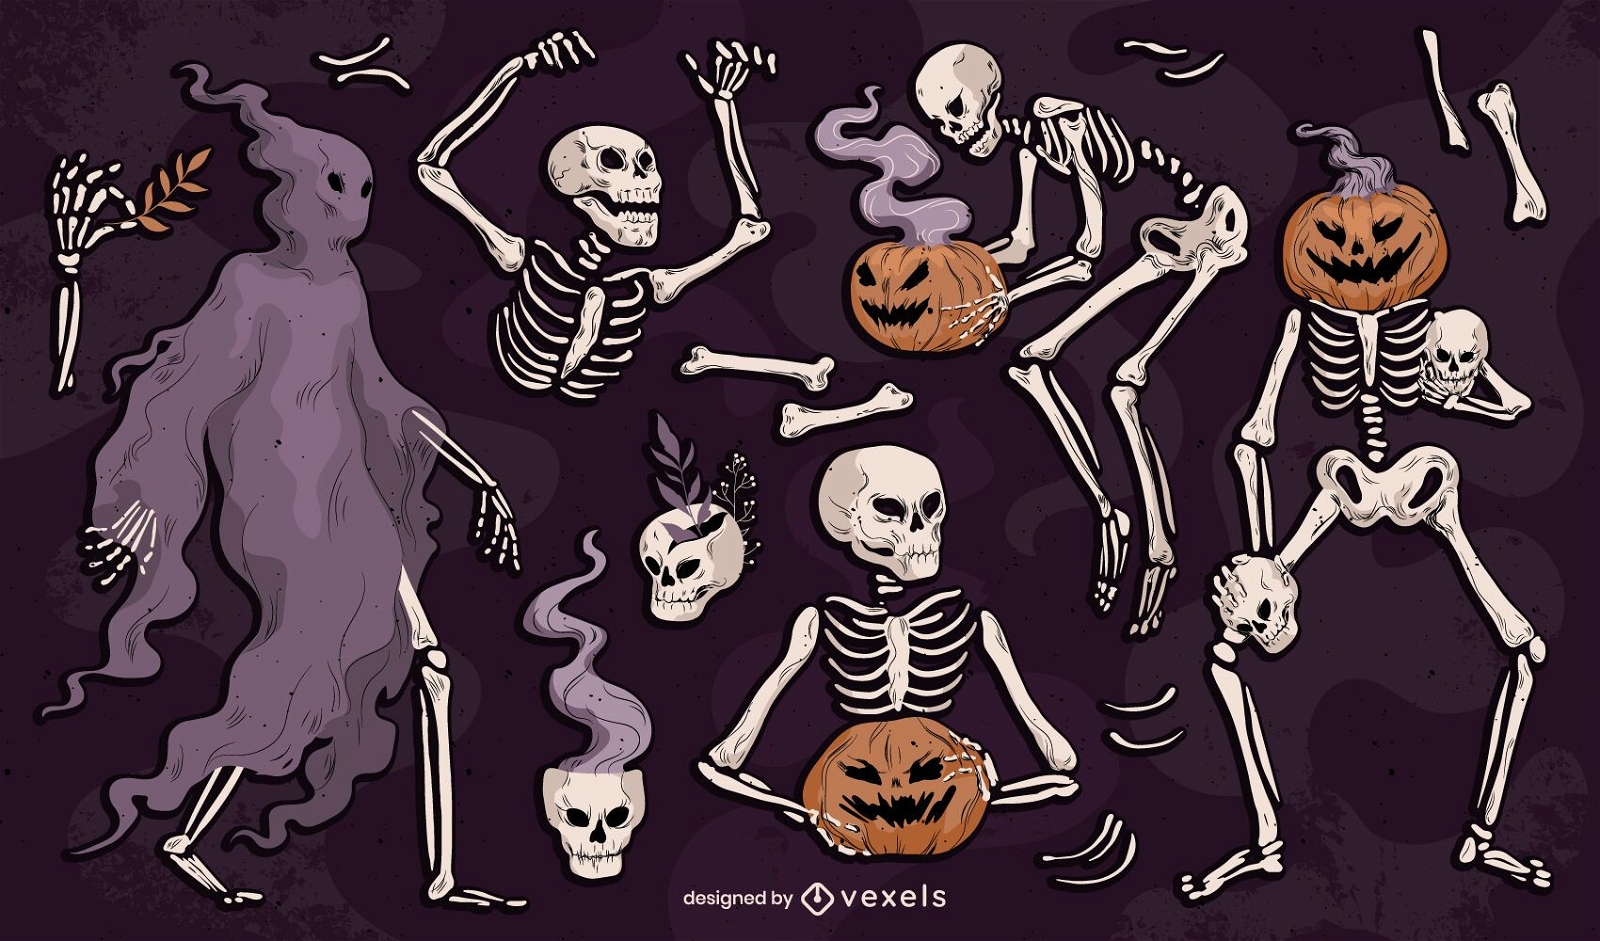 Paquete ilustrado de esqueletos de Halloween